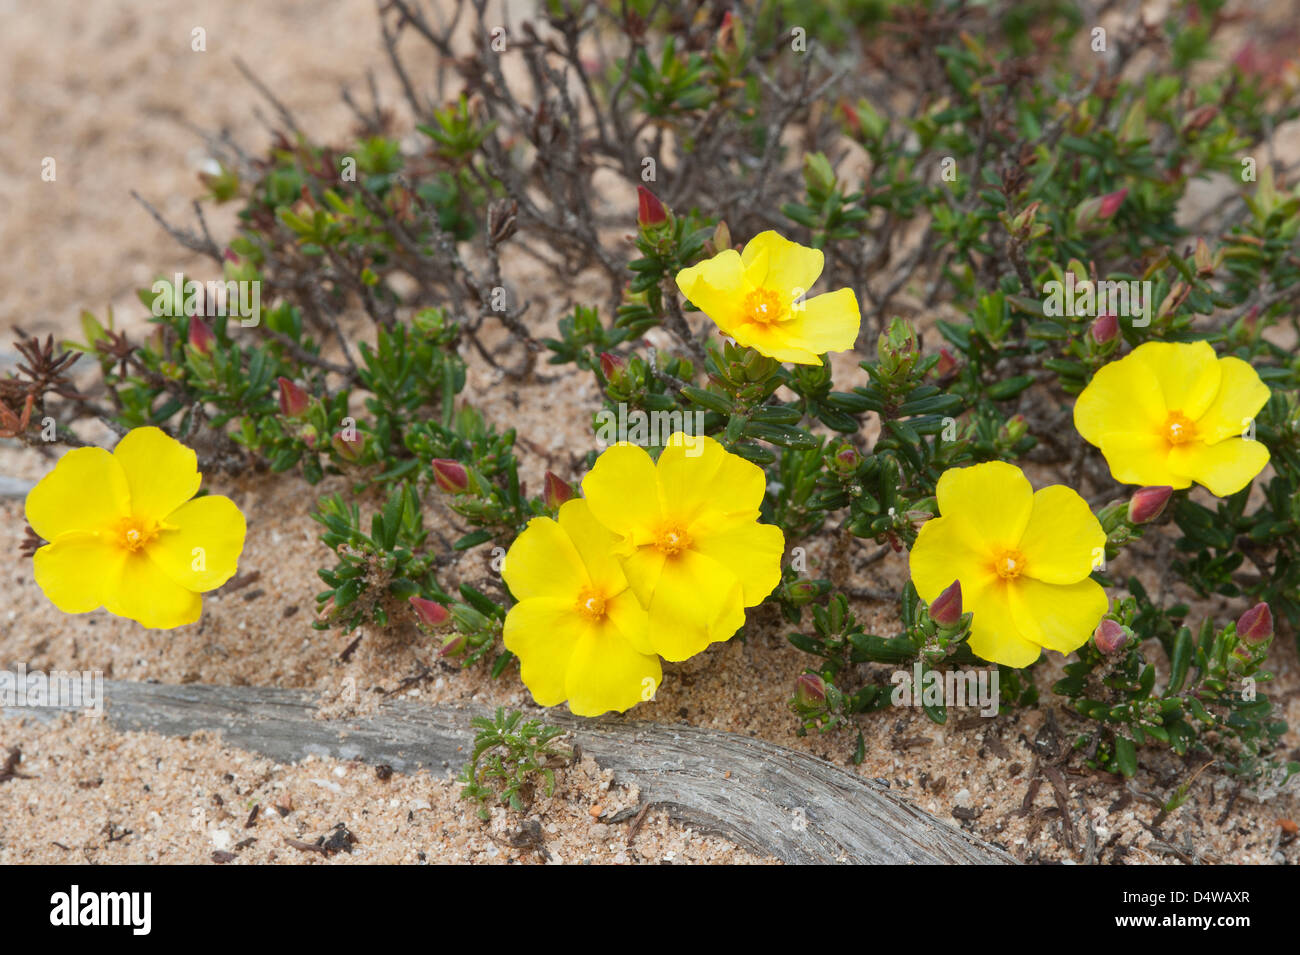 Coast rockrose (Halimium calycinum) flowers on sandy & rocky coastal habitat the Costa Vicentina Park Algarve Portugal Europe Stock Photo